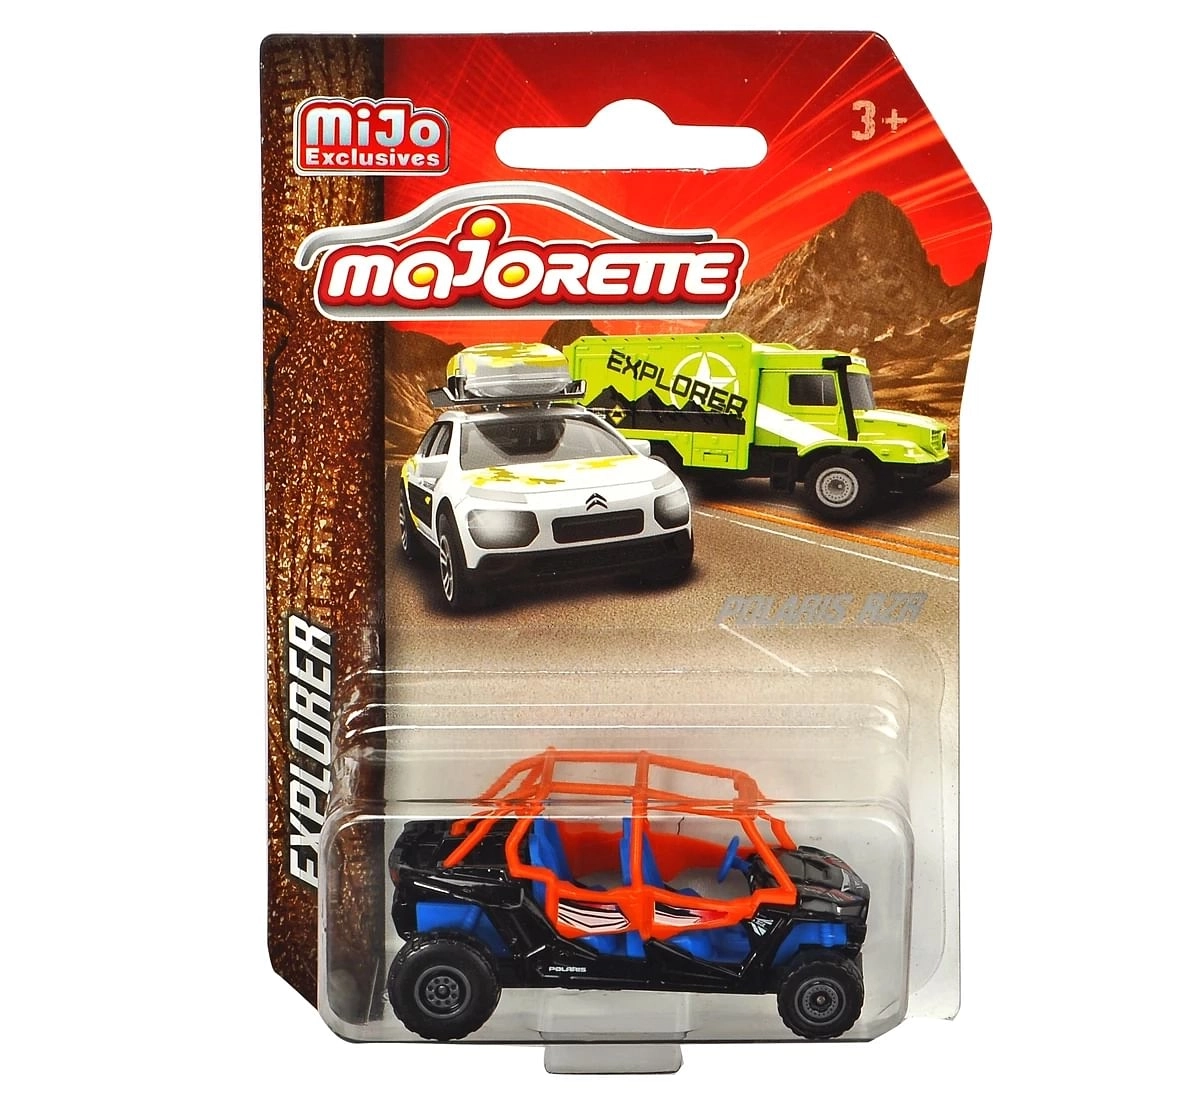 Majorette Explorer Die Cast Vehicle Toy for Kids, 3Y+, Assorted